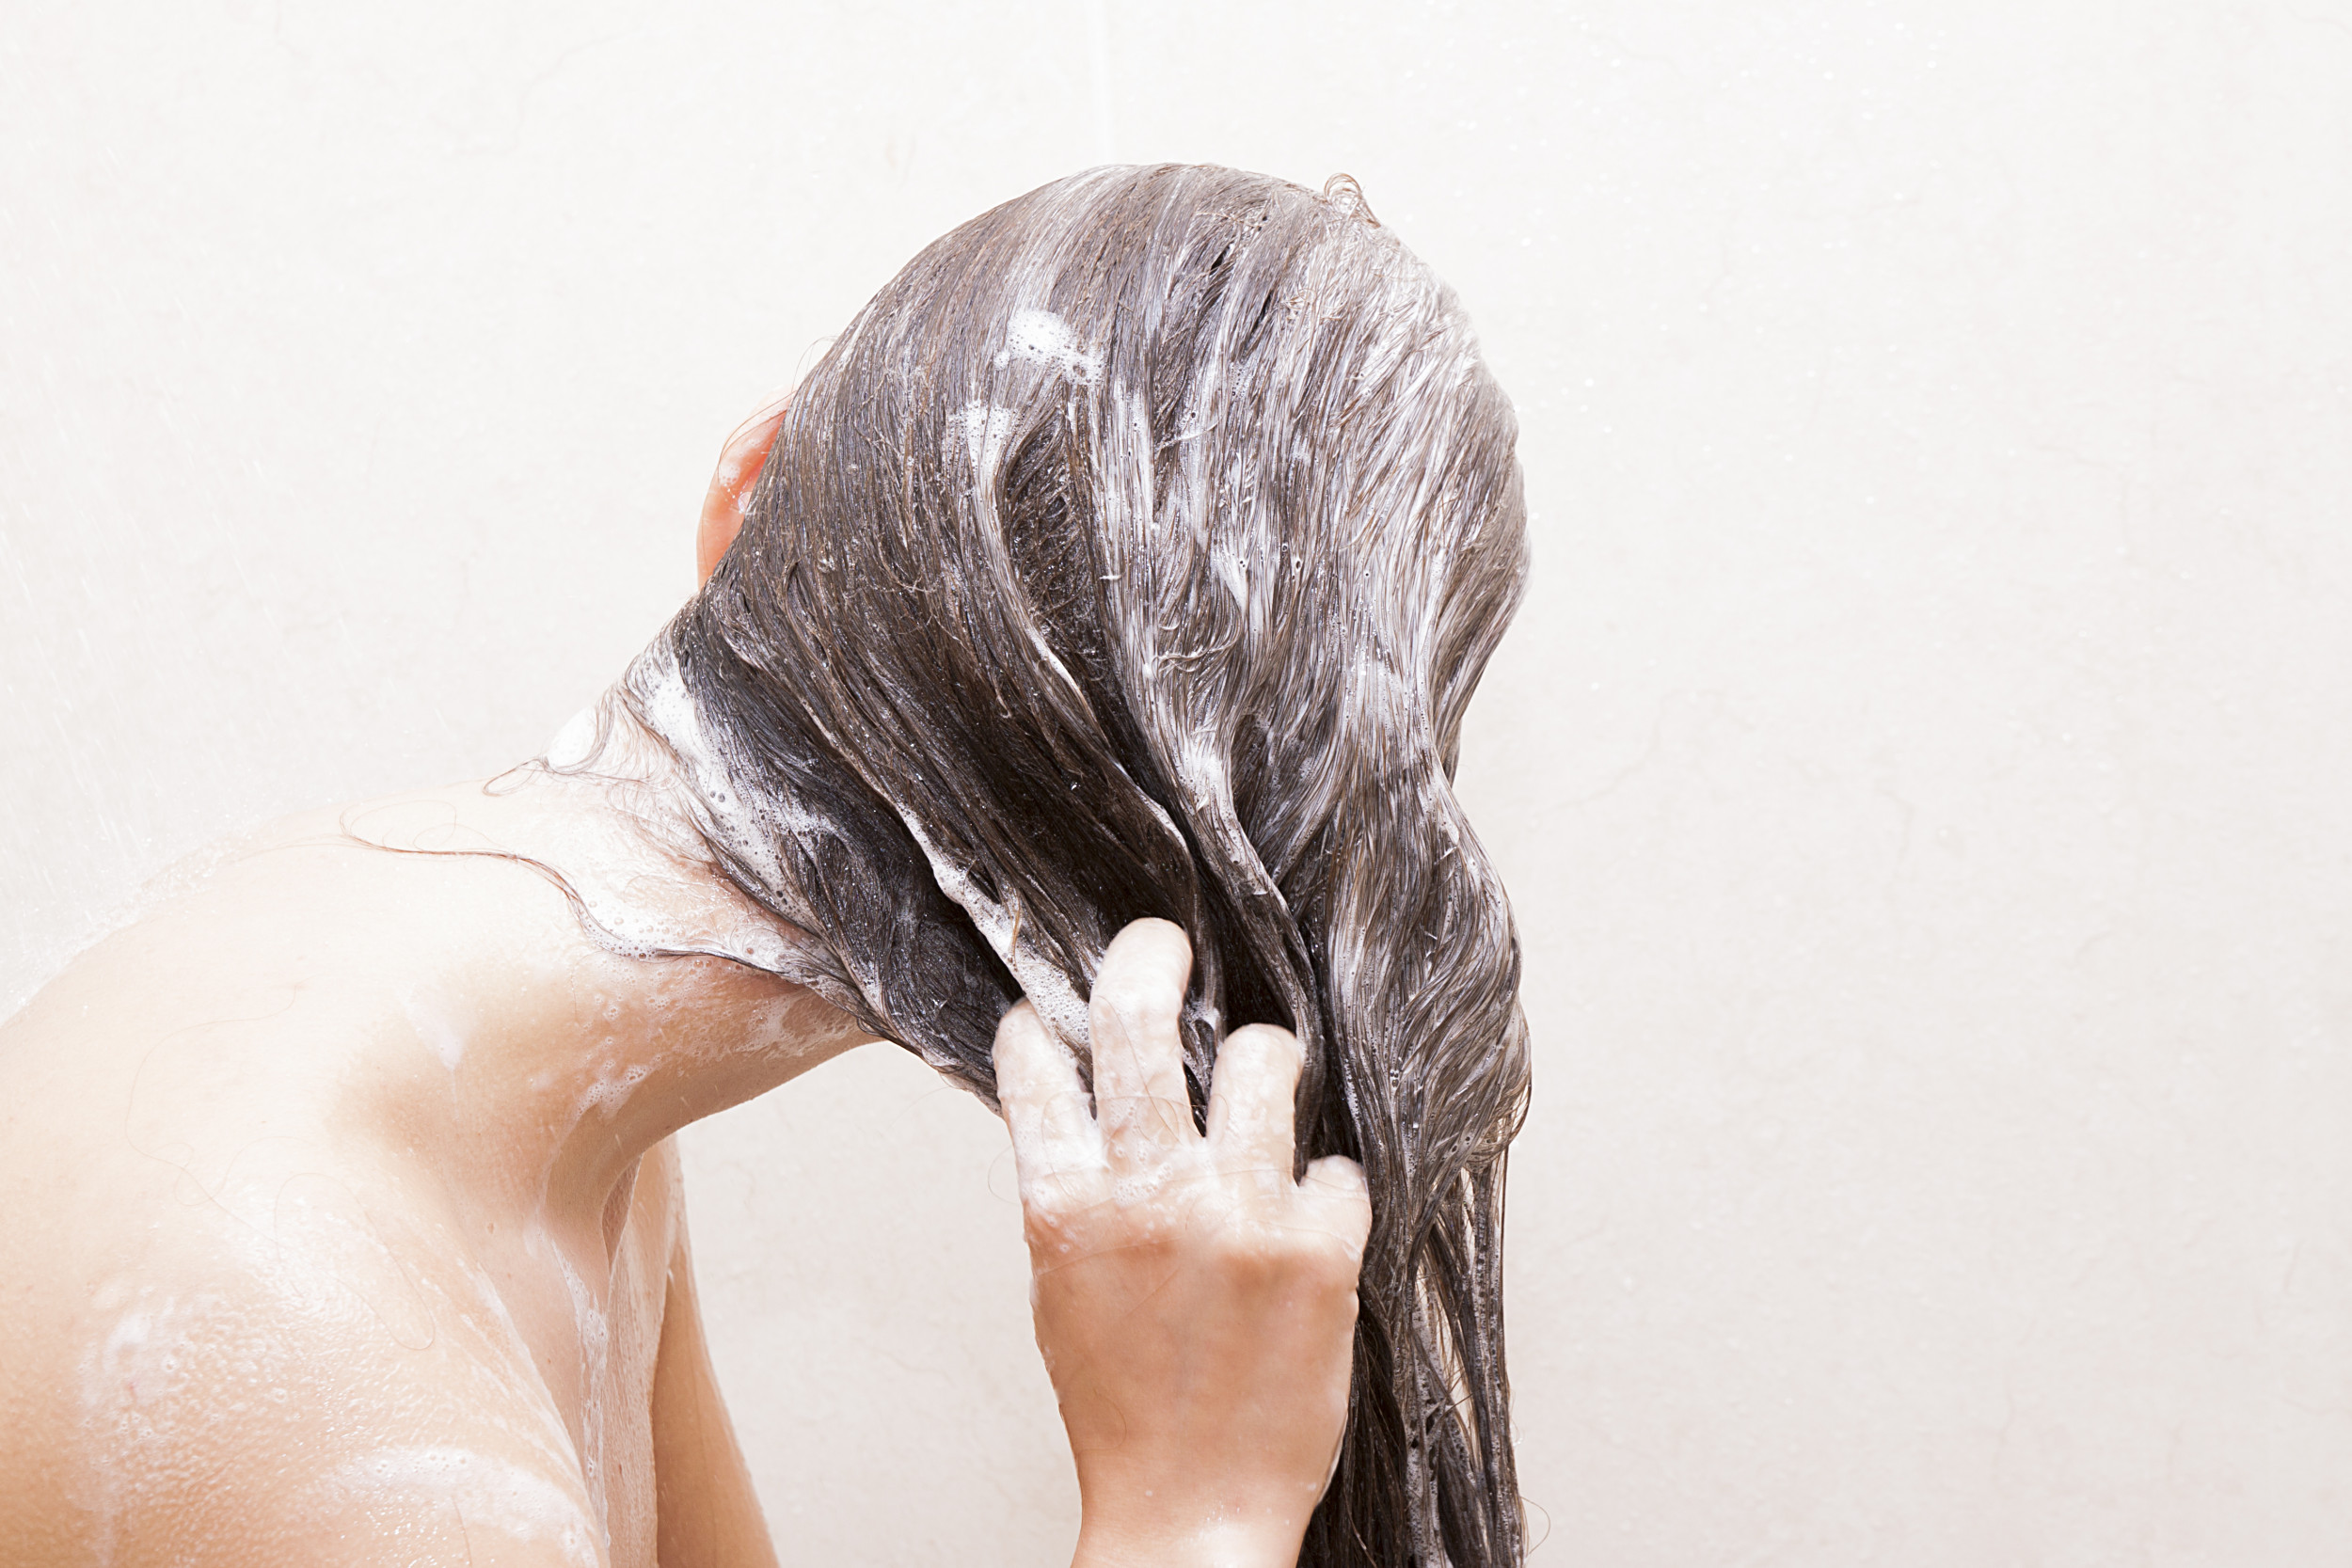 Hair shampoo